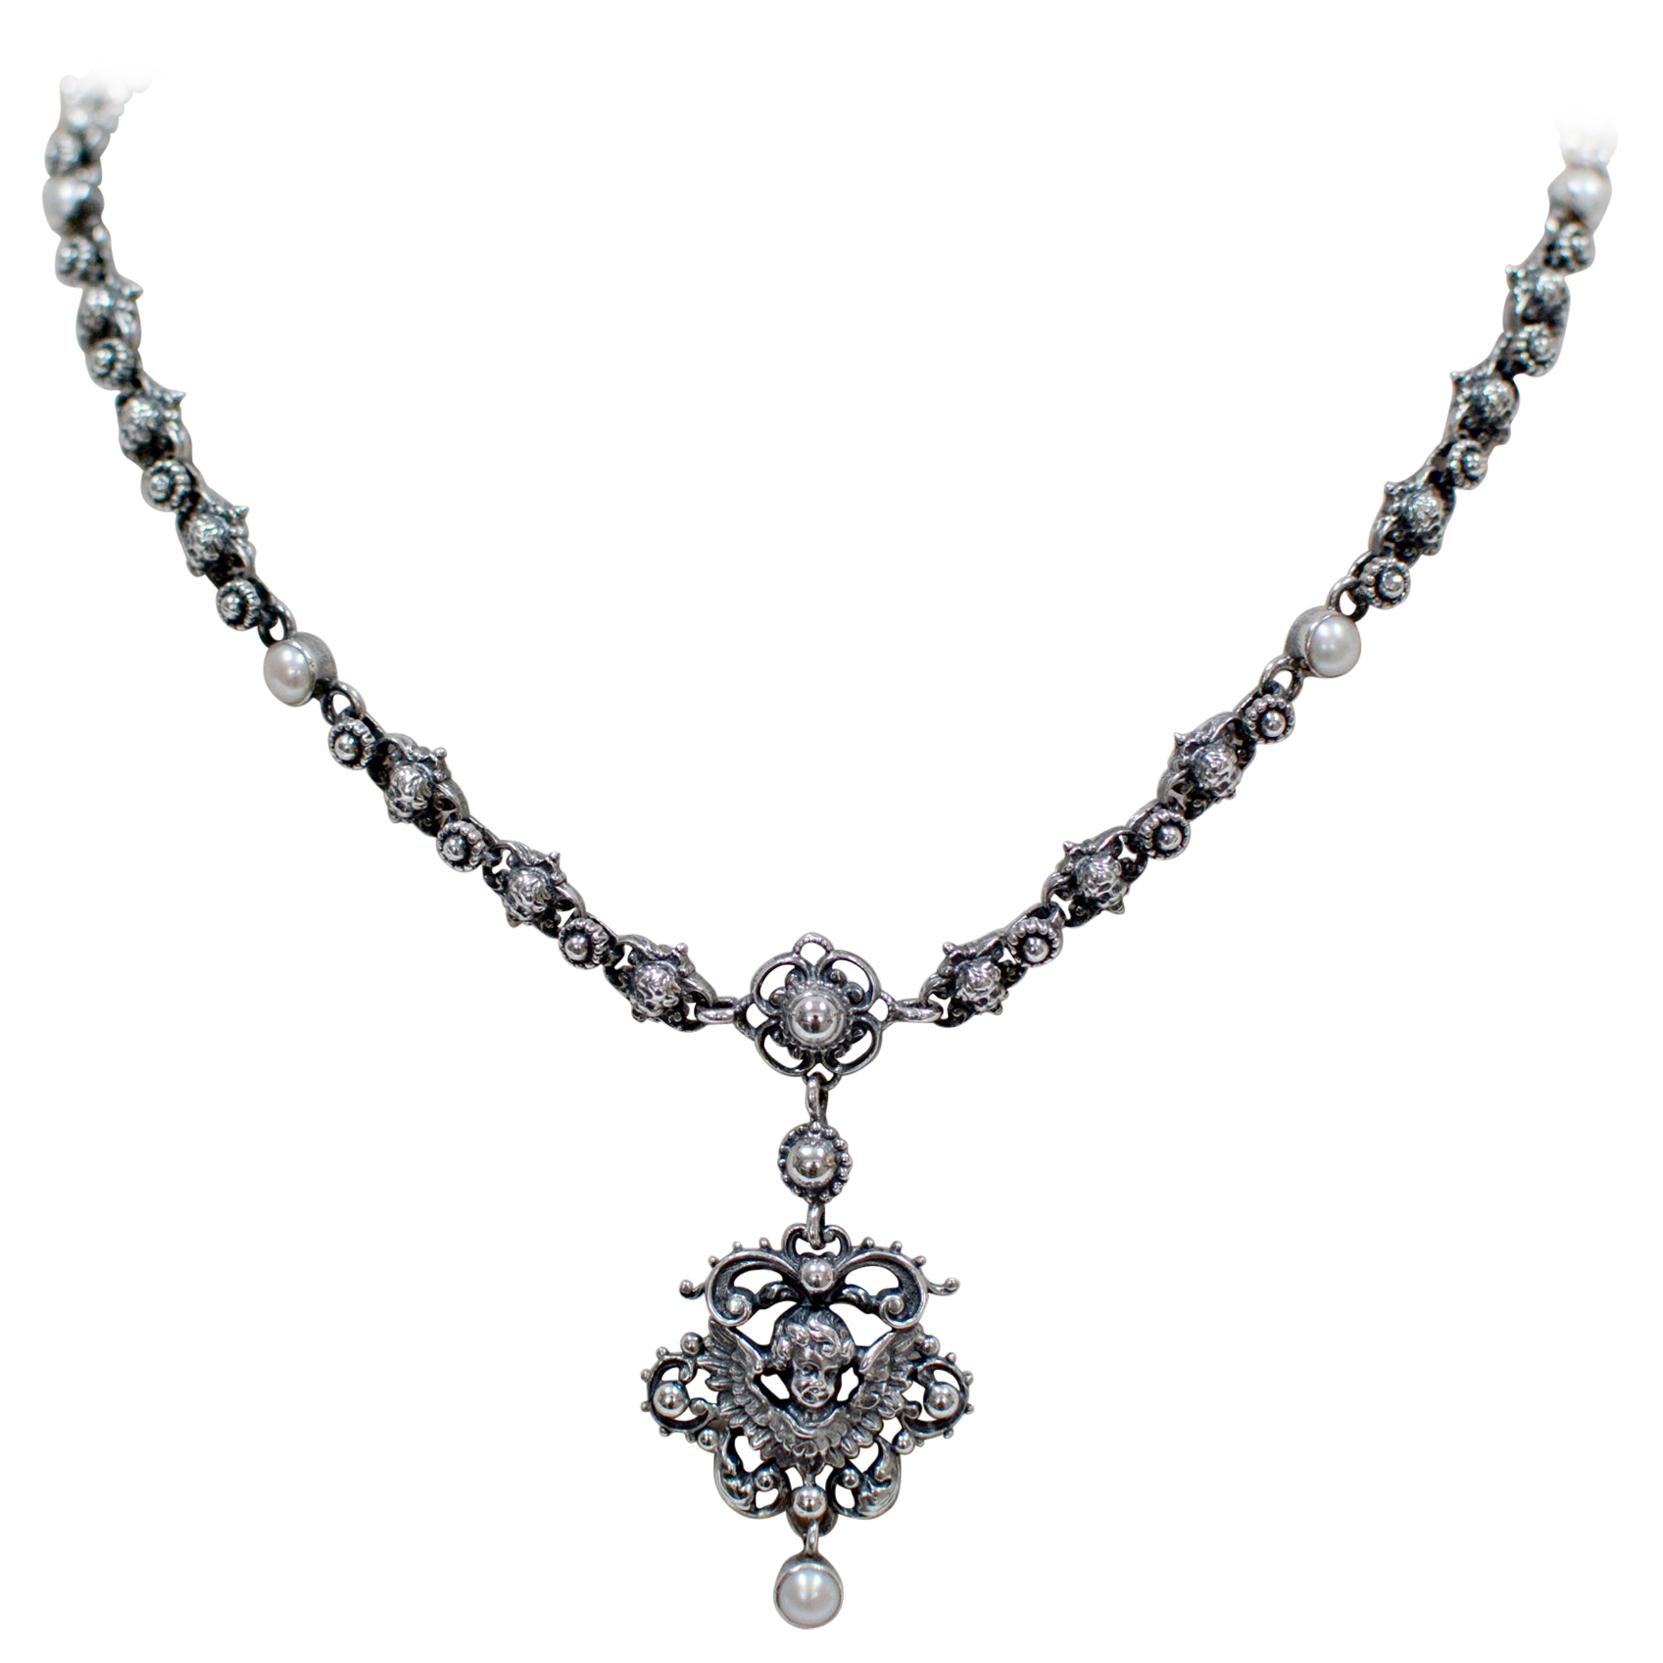 Jill Garber, collier baroque figuratif en forme d'ange en argent sterling avec perles